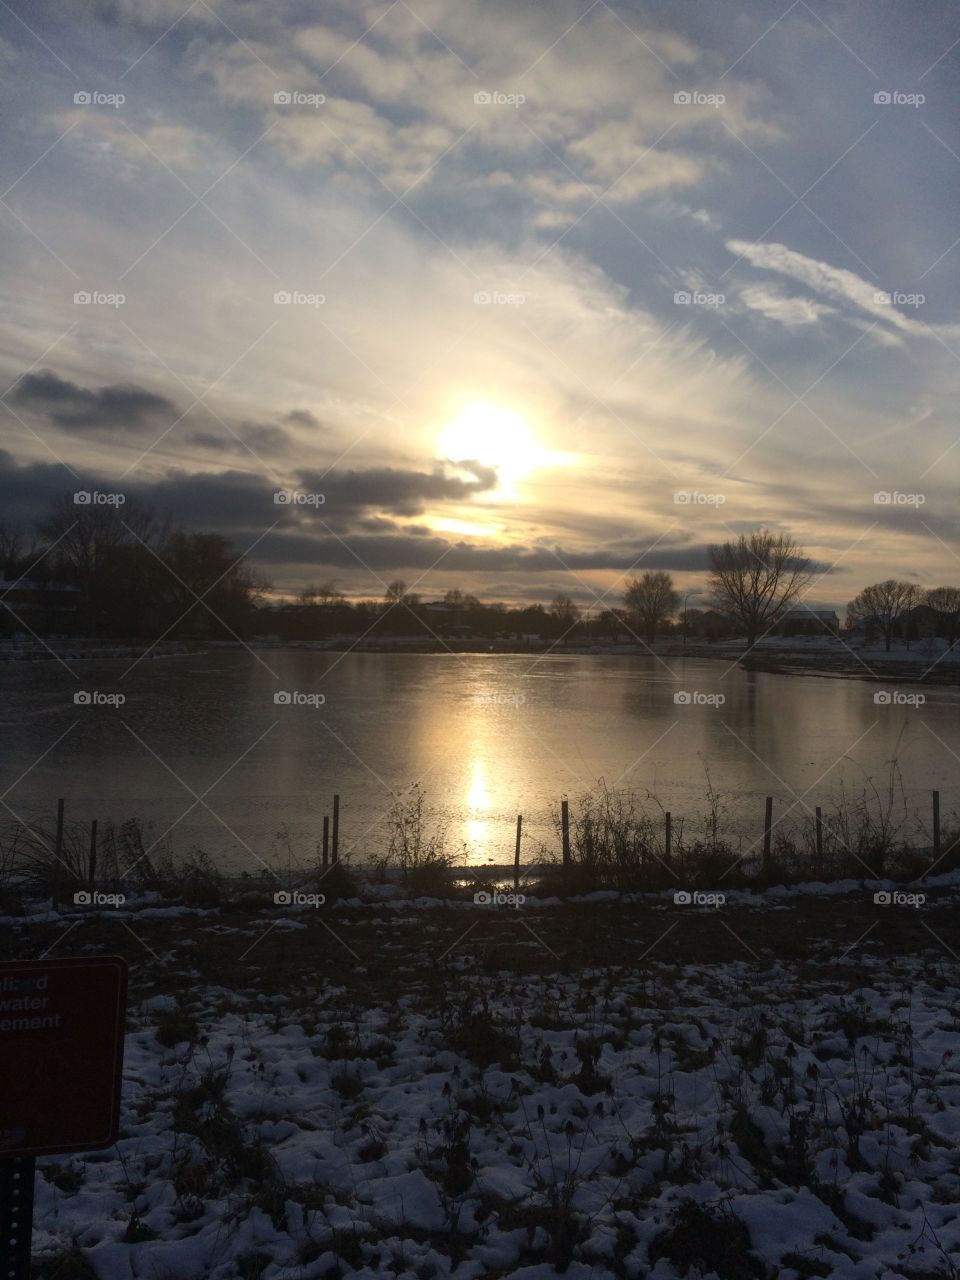 Winter sunset icy lake 